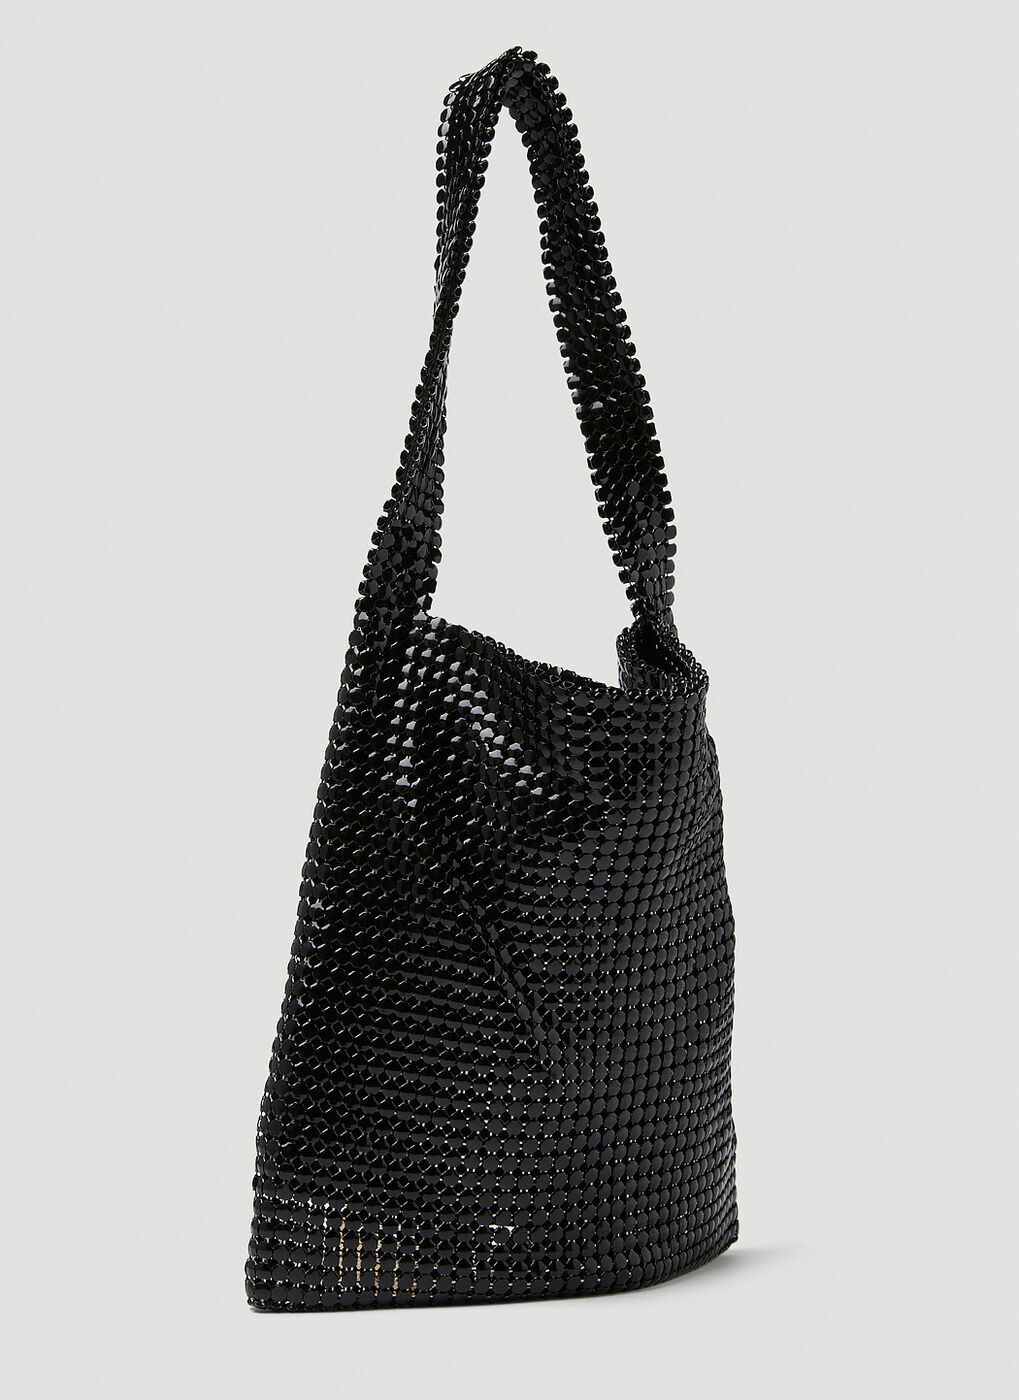 Pixel Hobo Shoulder Bag in Black Paco Rabanne